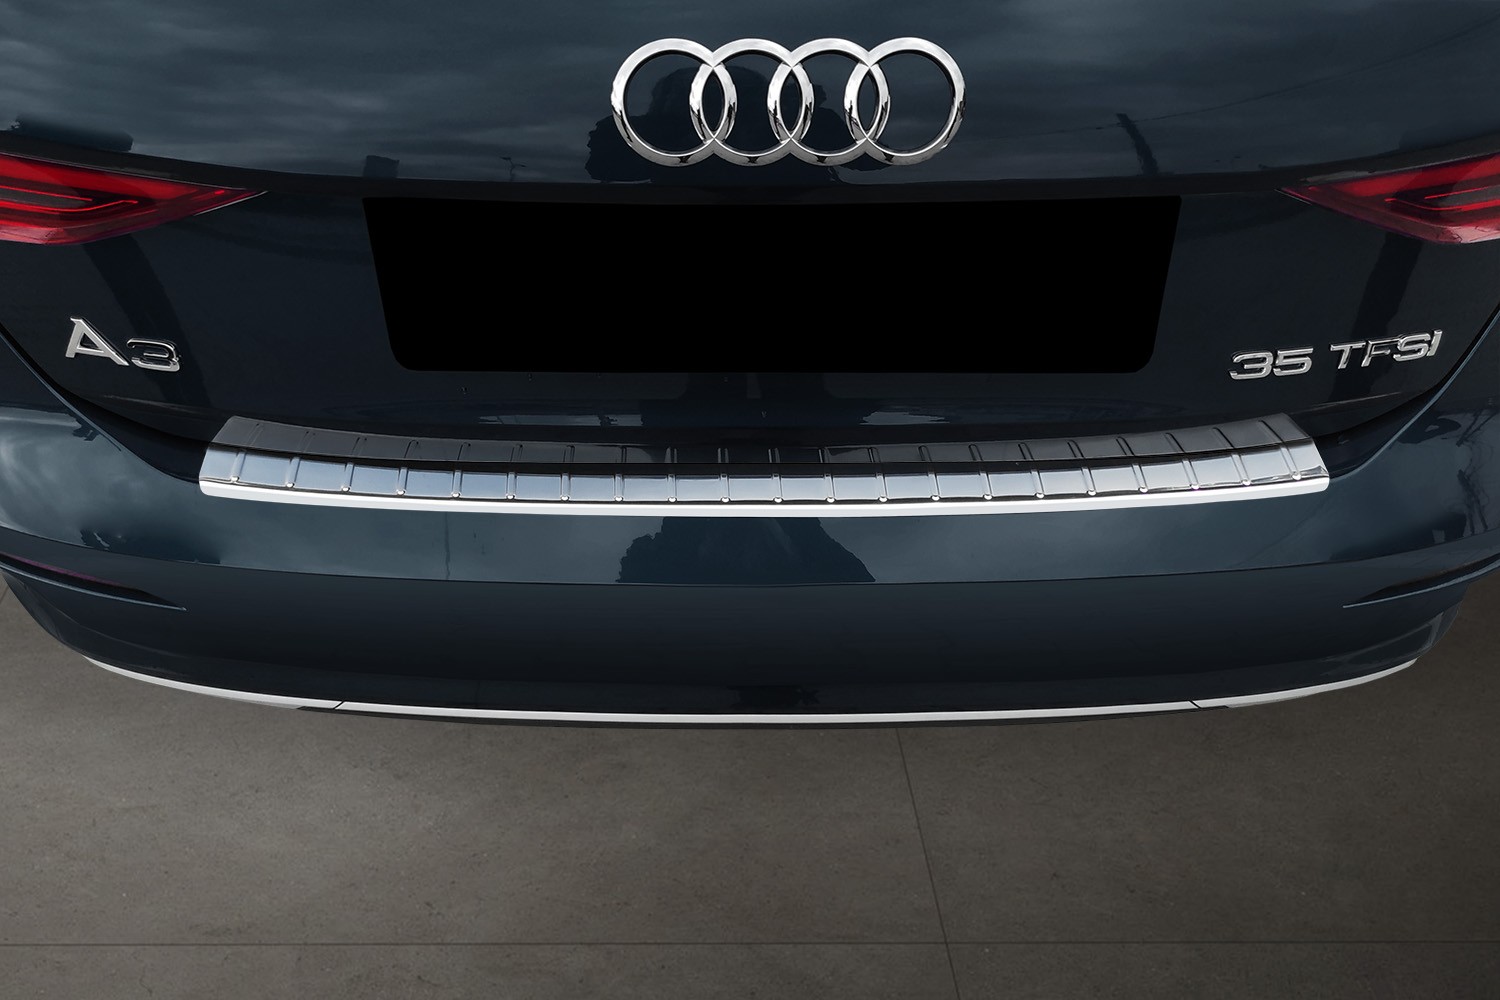 Audi A3 Bumper Flap  Interior Vehicle Protection